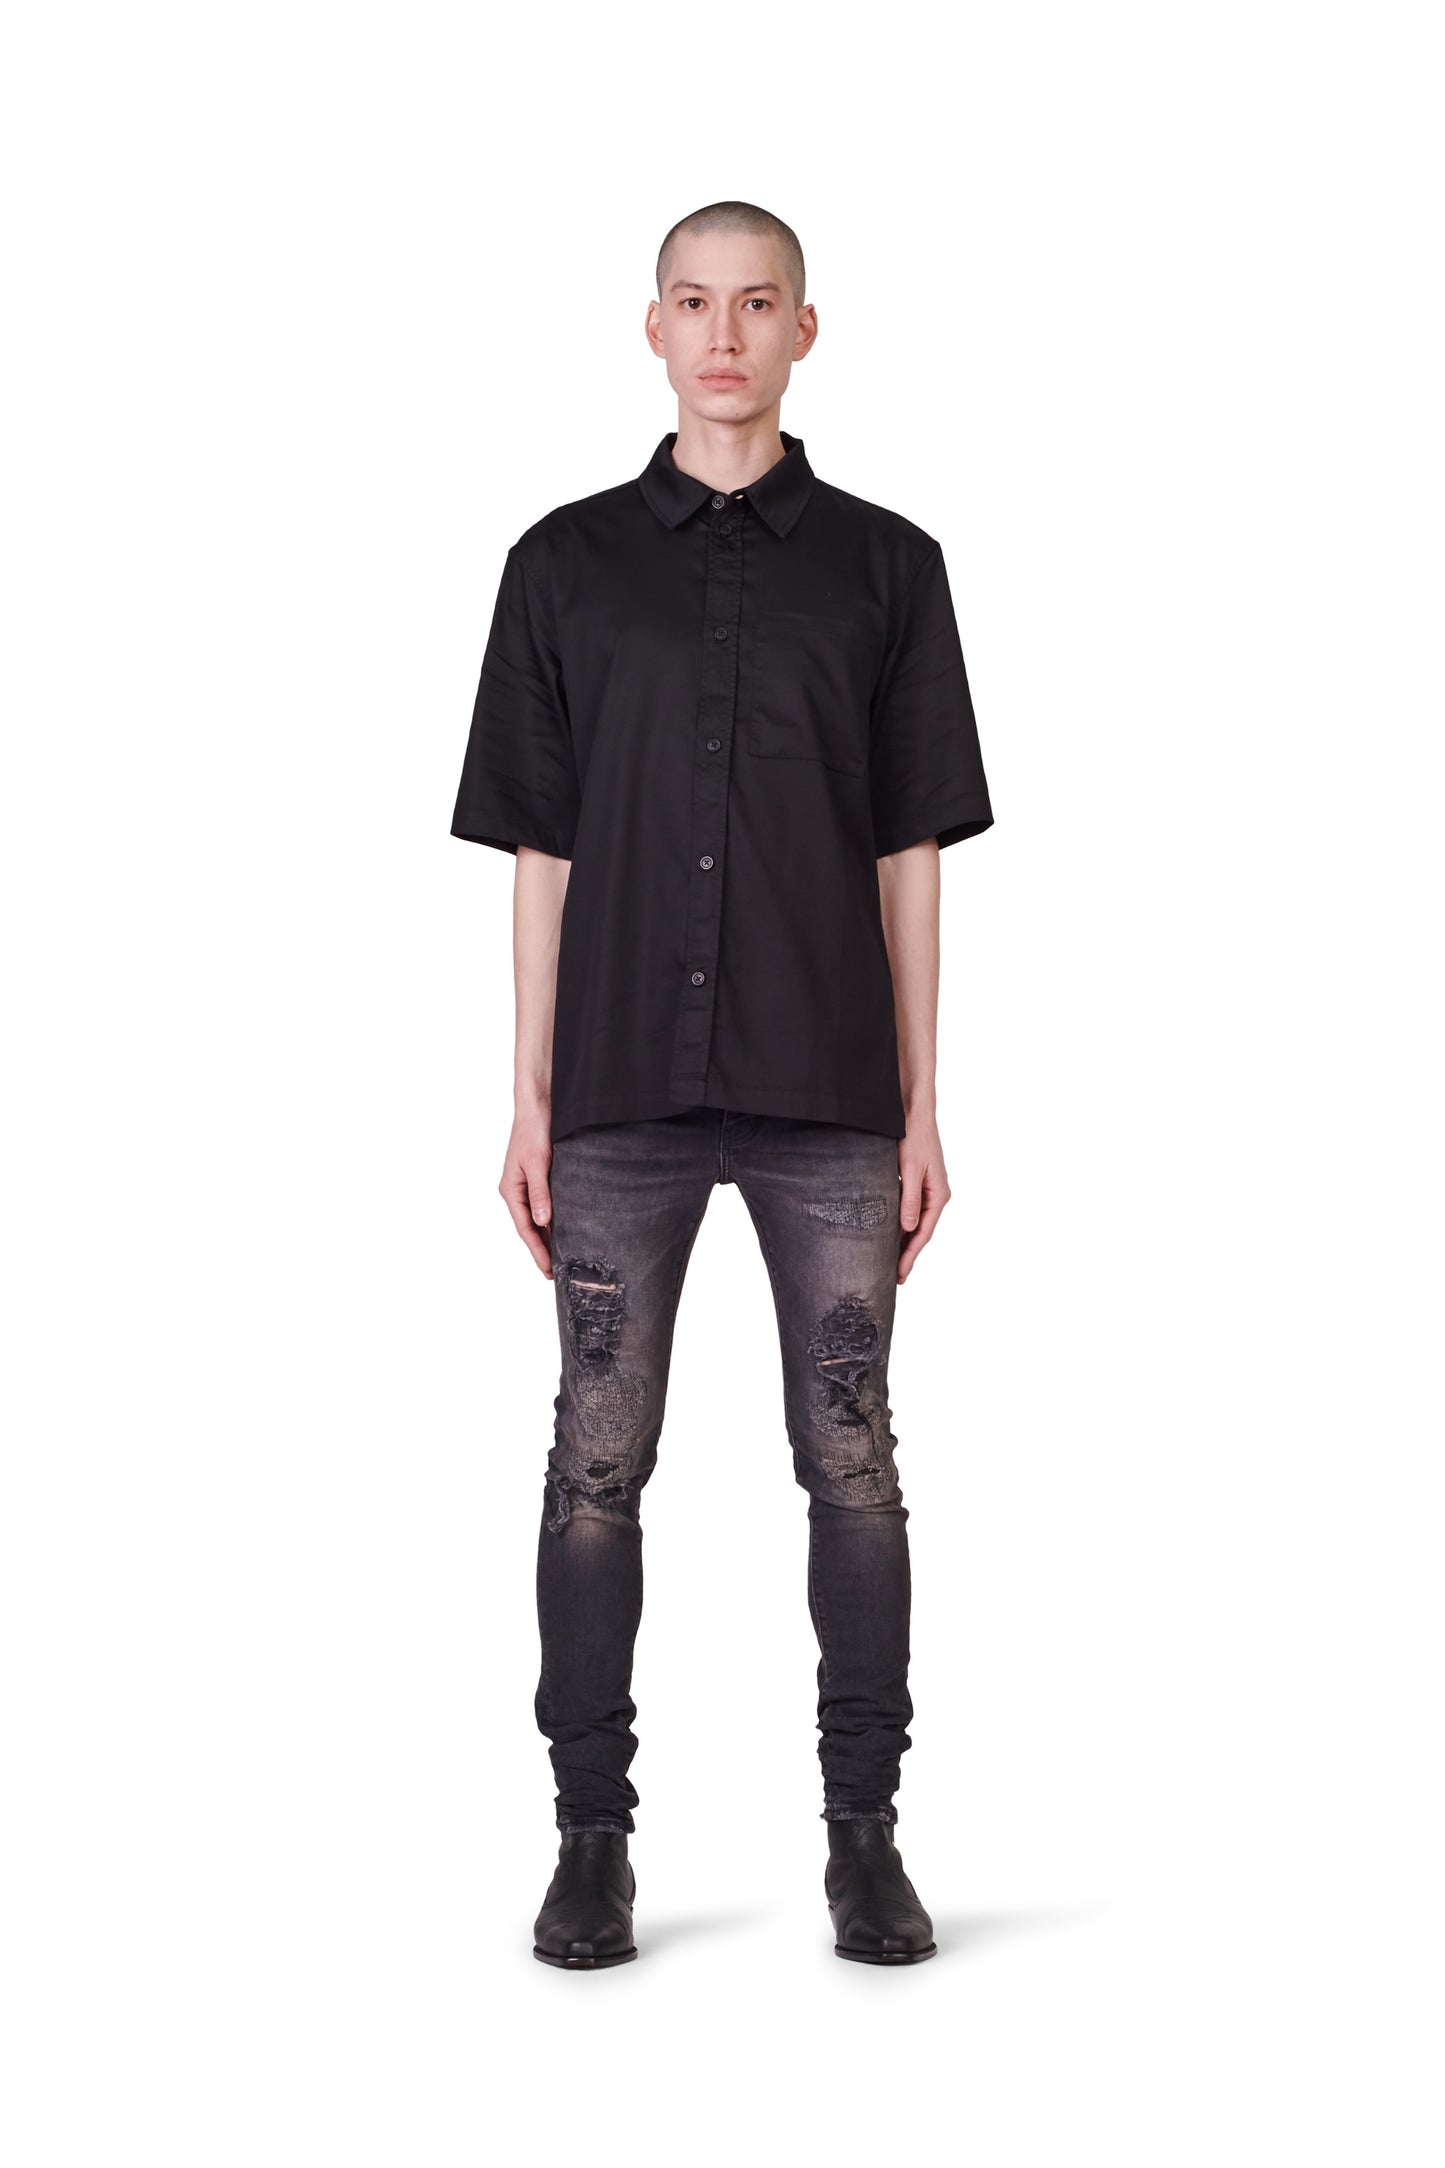 PURPLE BRAND - Men's Denim Jean - Low Rise Skinny - Style No. P001 - Black Four Pocket Destroy- Model Front Pose 